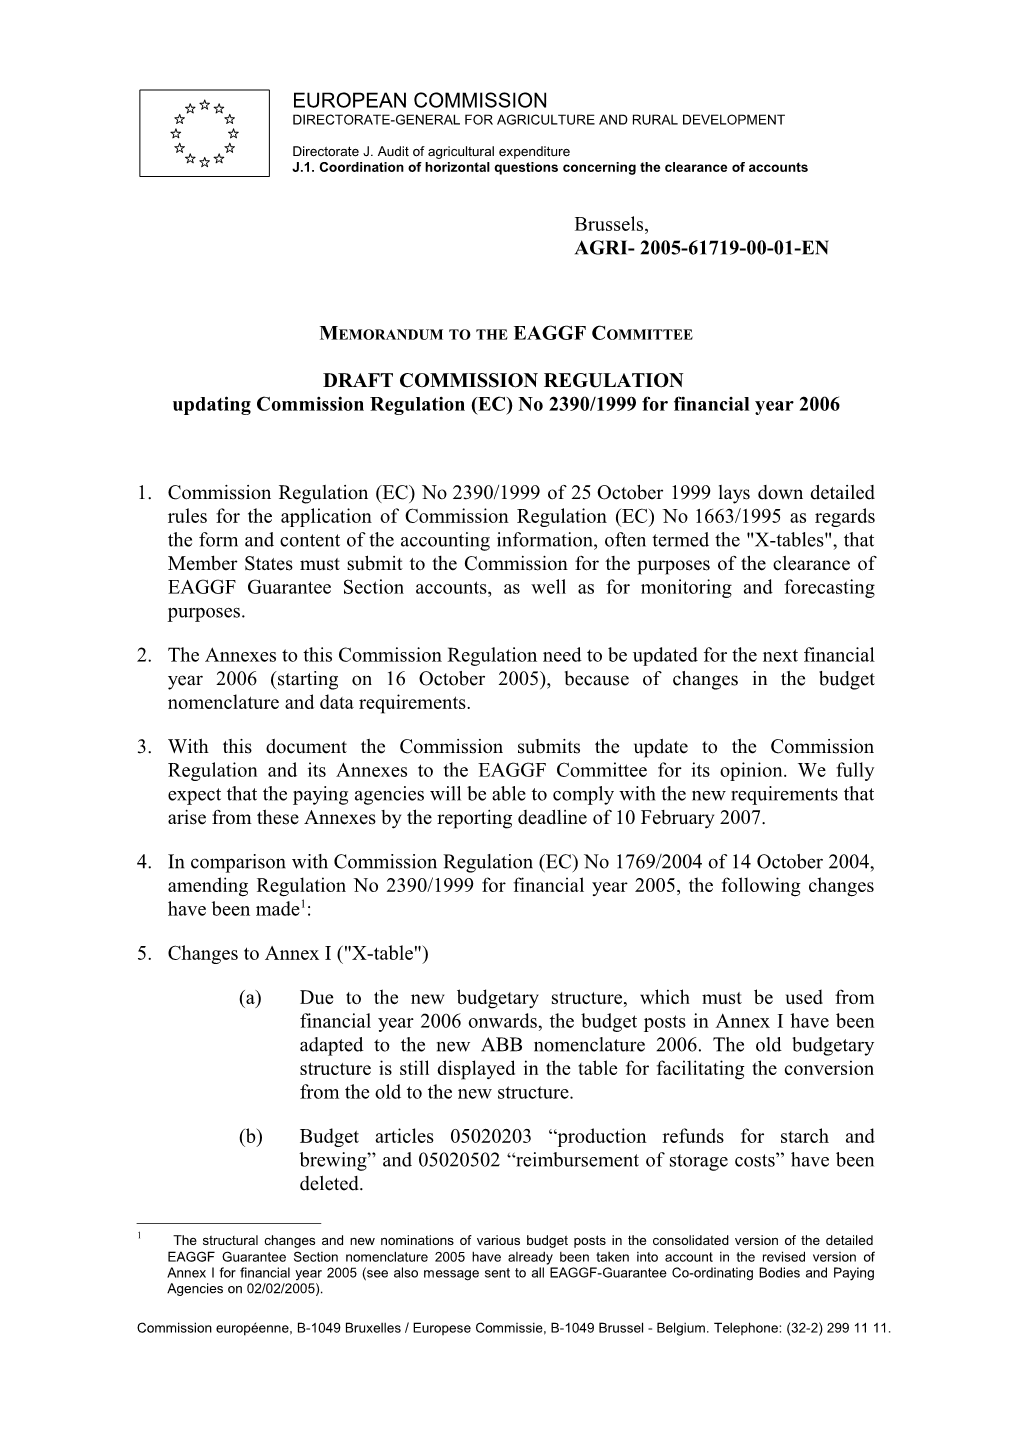 Memorandum to the EAGGF Committee DRAFT COMMISSION REGULATION Updating Commission Regulation